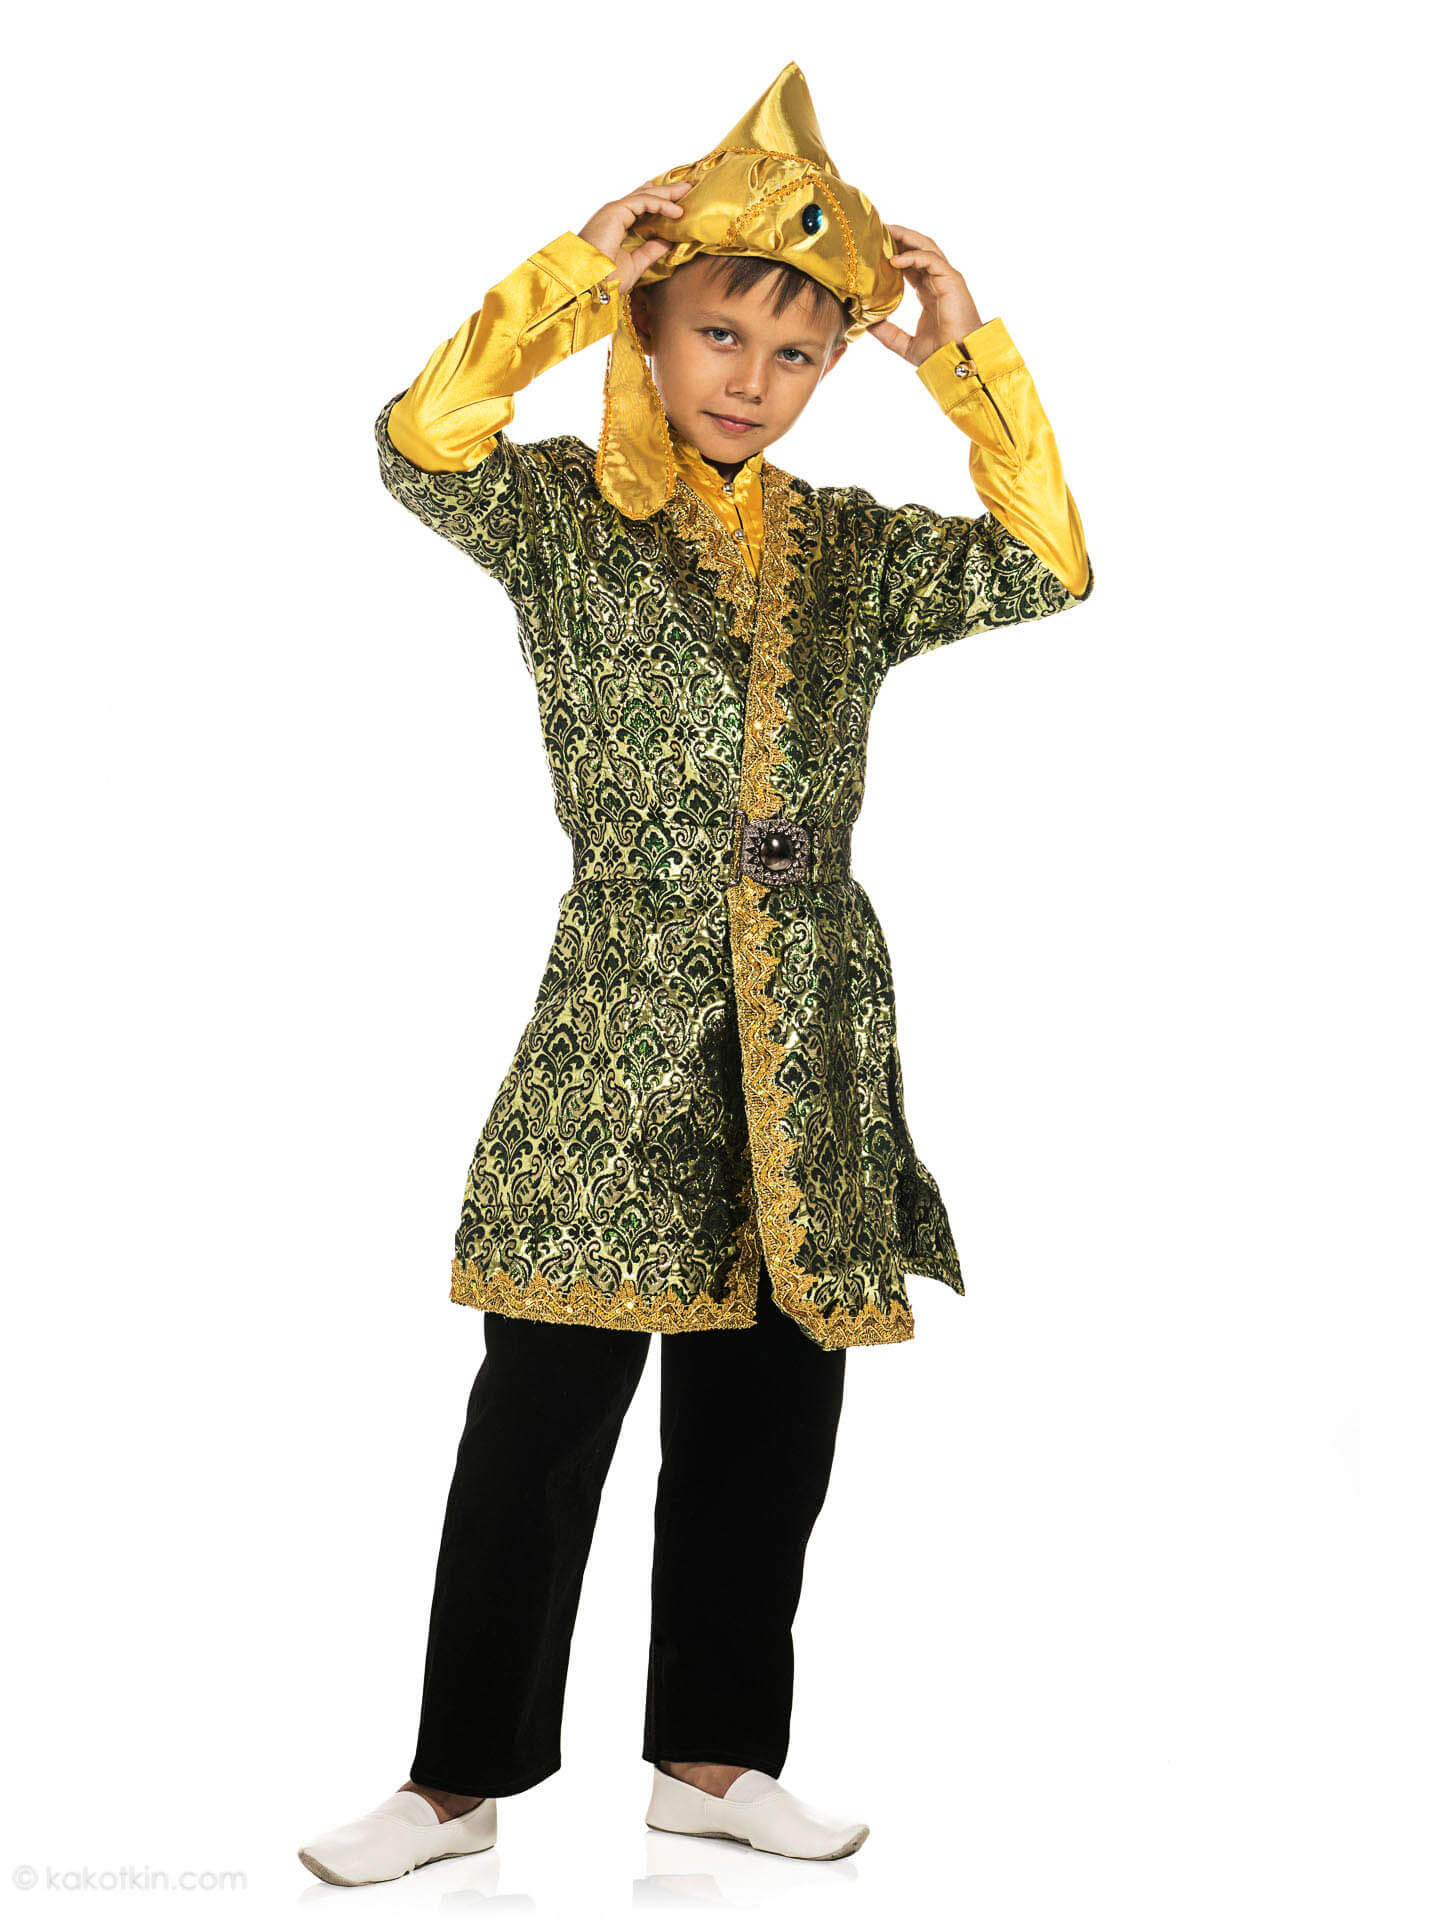 Съёмка для каталога интернет магазина рекламная на модели, детской, на невидимке, манекене, курток платьев трикотажа Москва